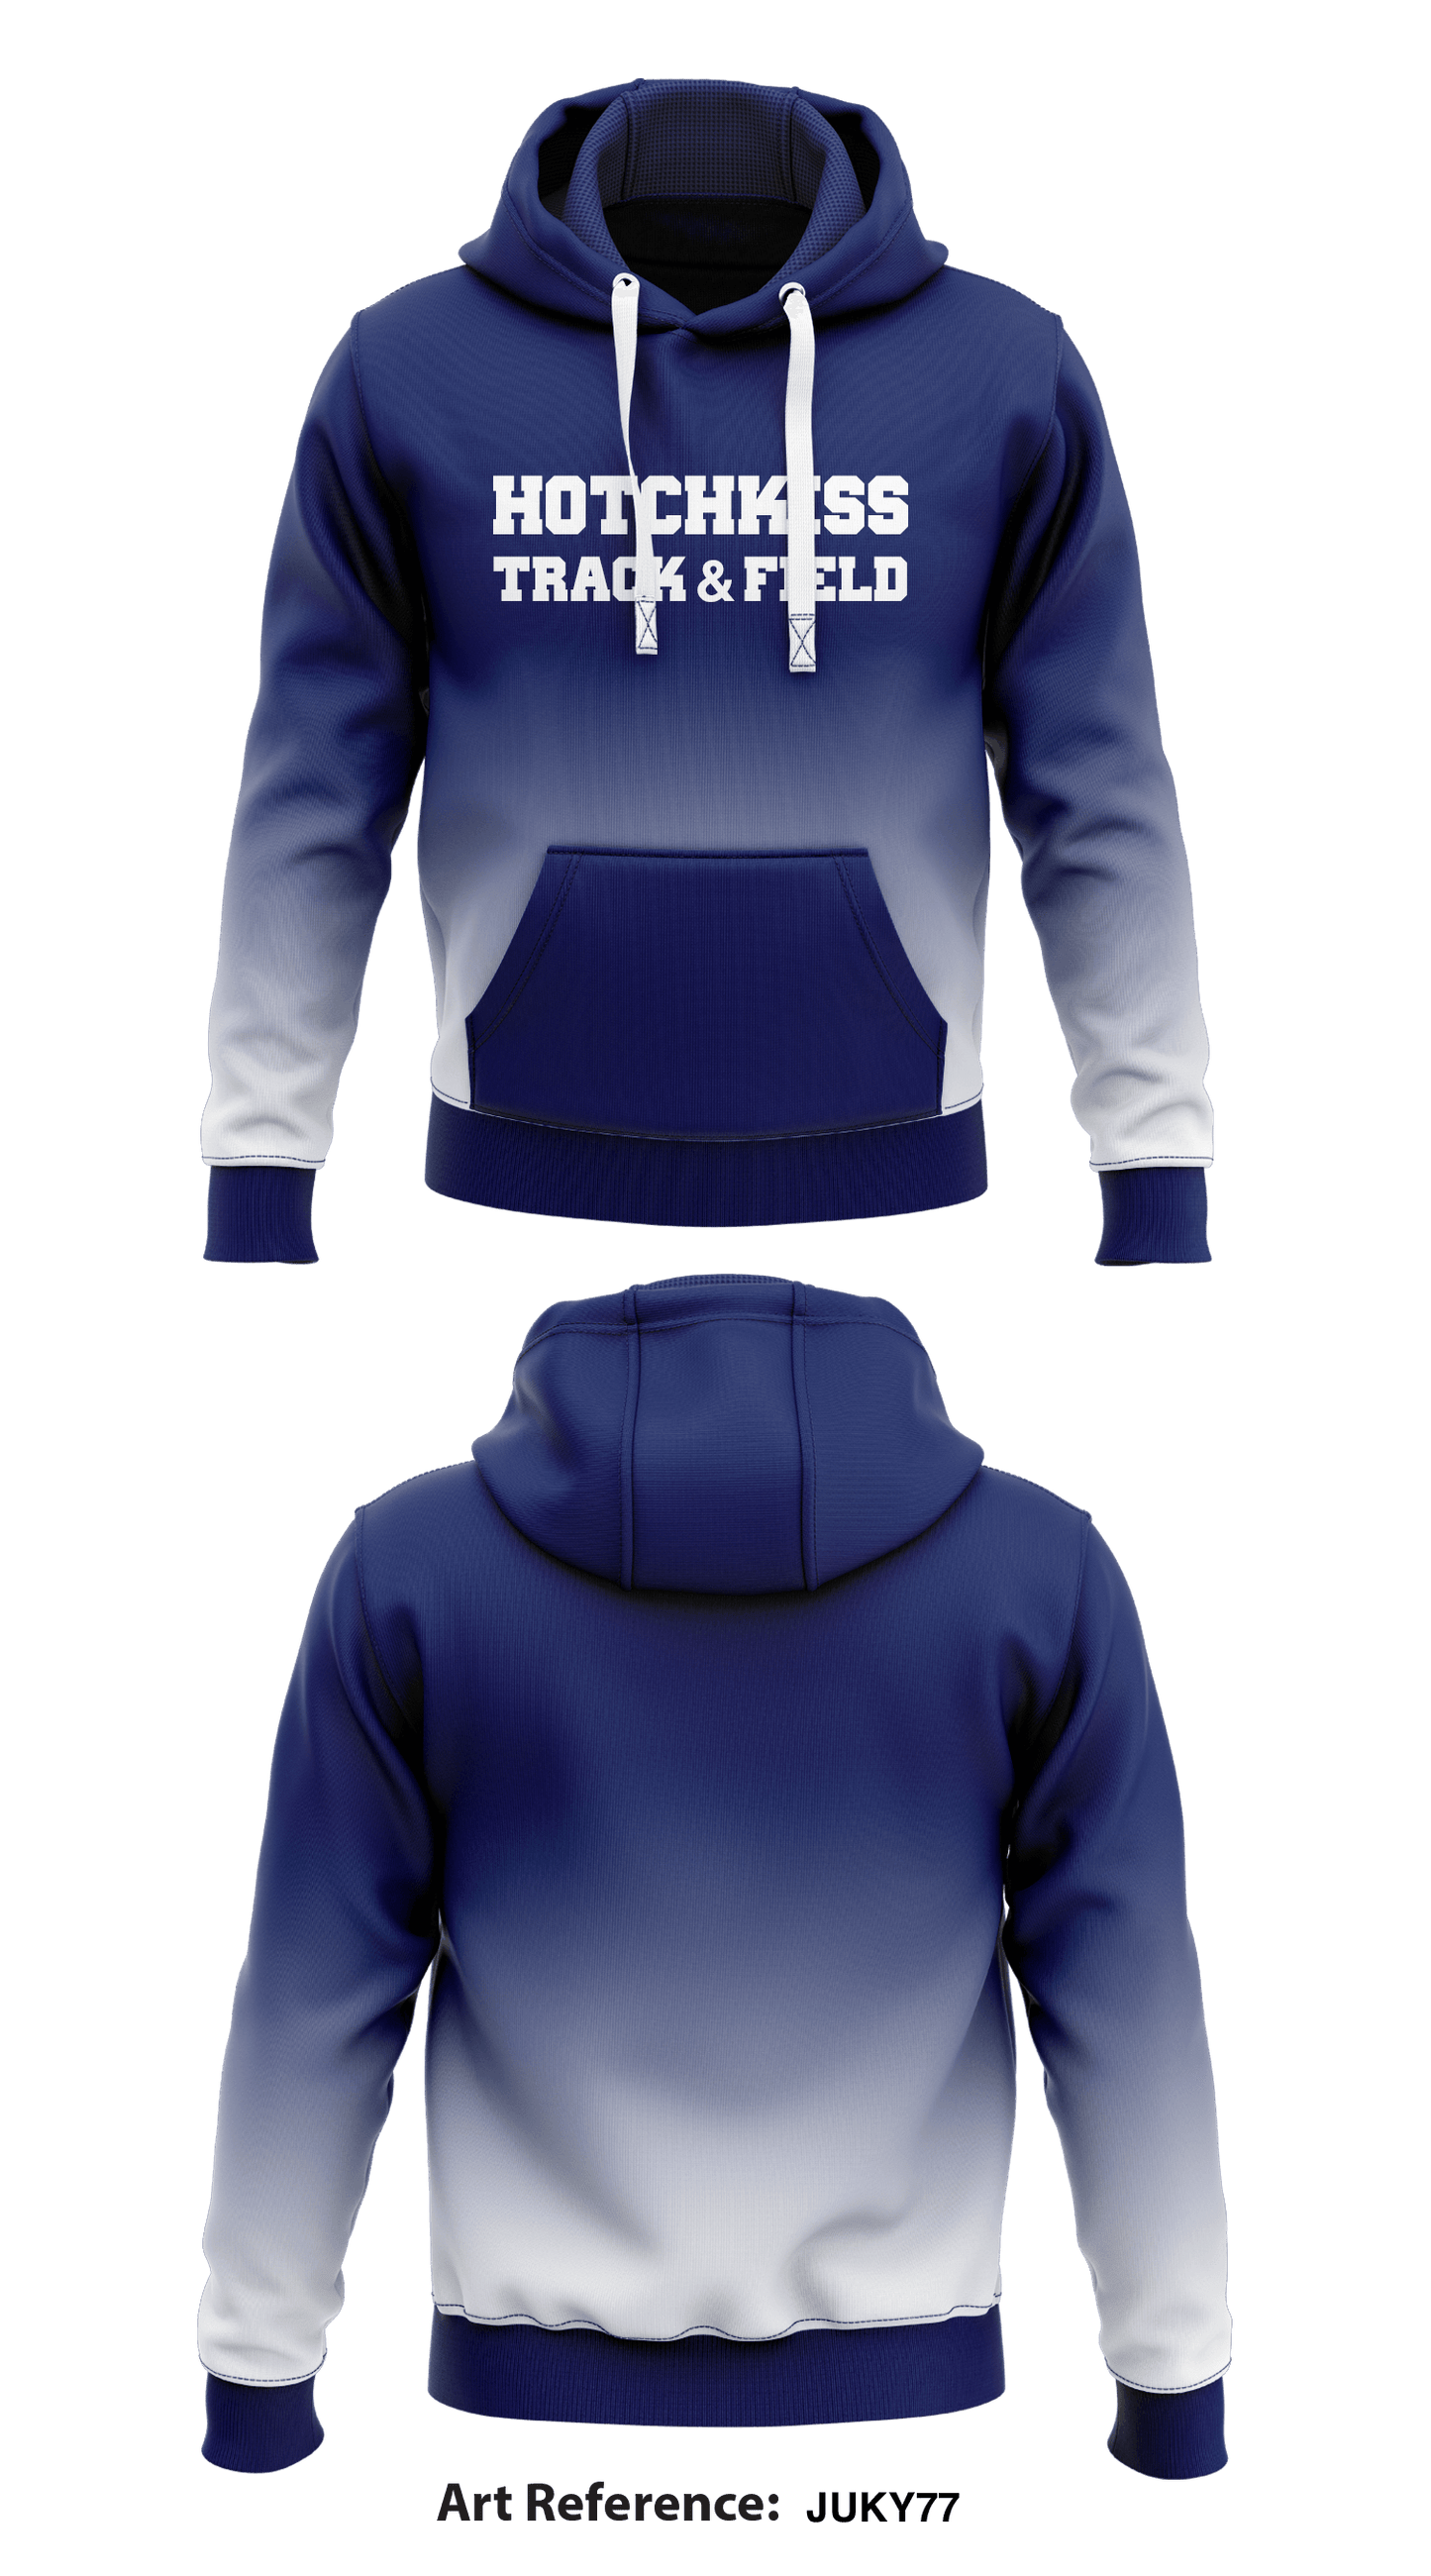 Hotchkiss Track & Field Store 1  Core Men's Hooded Performance Sweatshirt - JuKy77